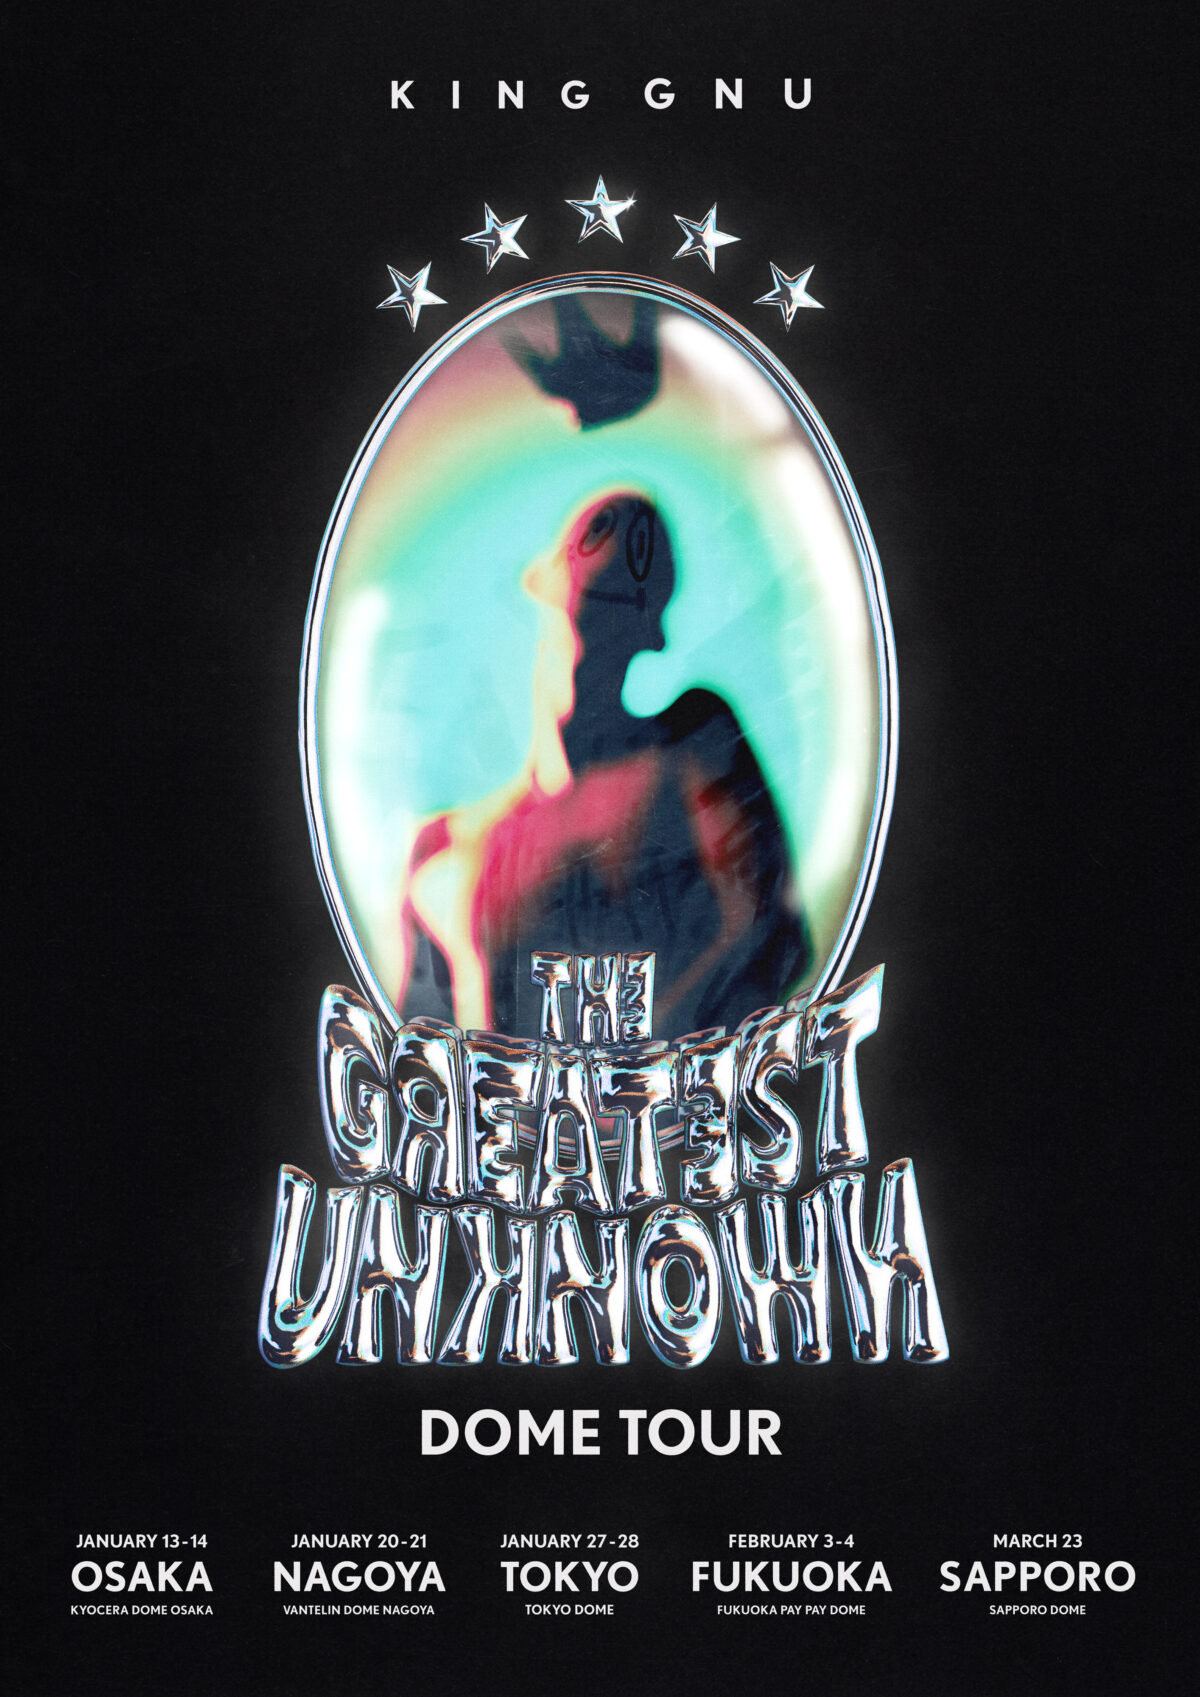 King Gnu約4年ぶりとなるNEW ALBUM「THE GREATEST UNKNOWN」11月29日発売決定!!!さらに全国5大ドームツアー開催決定!!!